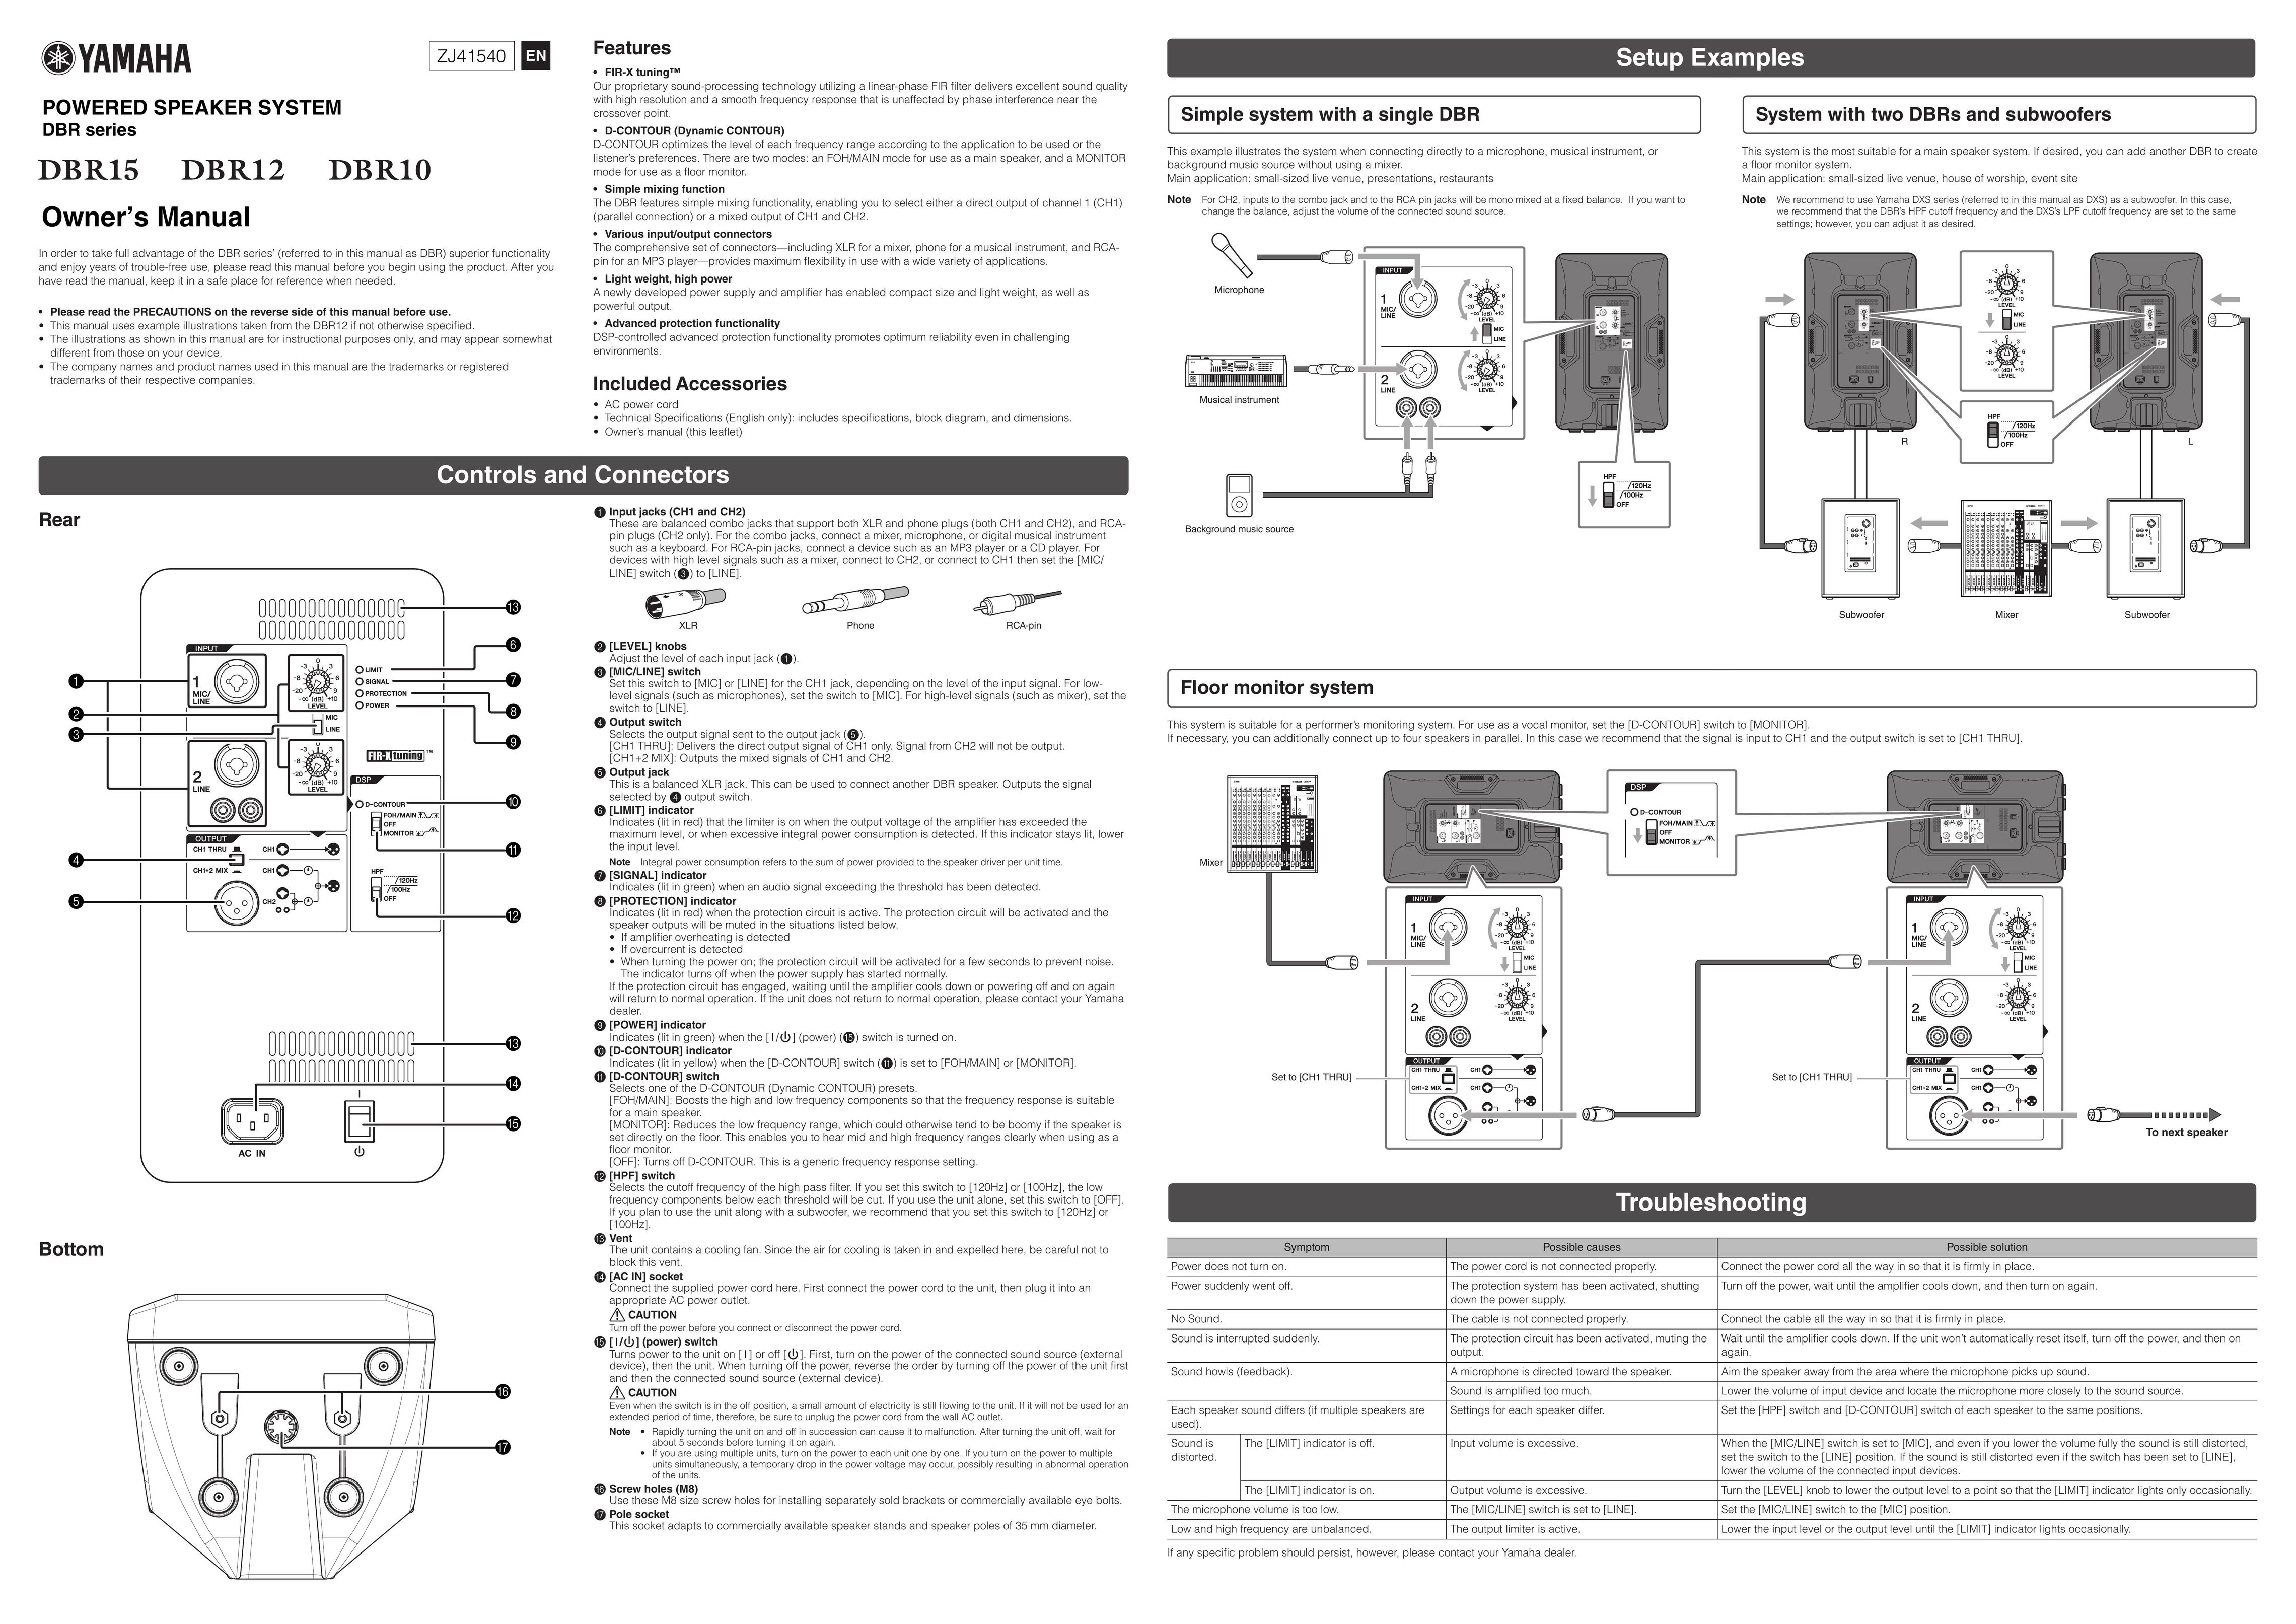 Yamaha DBR15 Speaker System User Manual